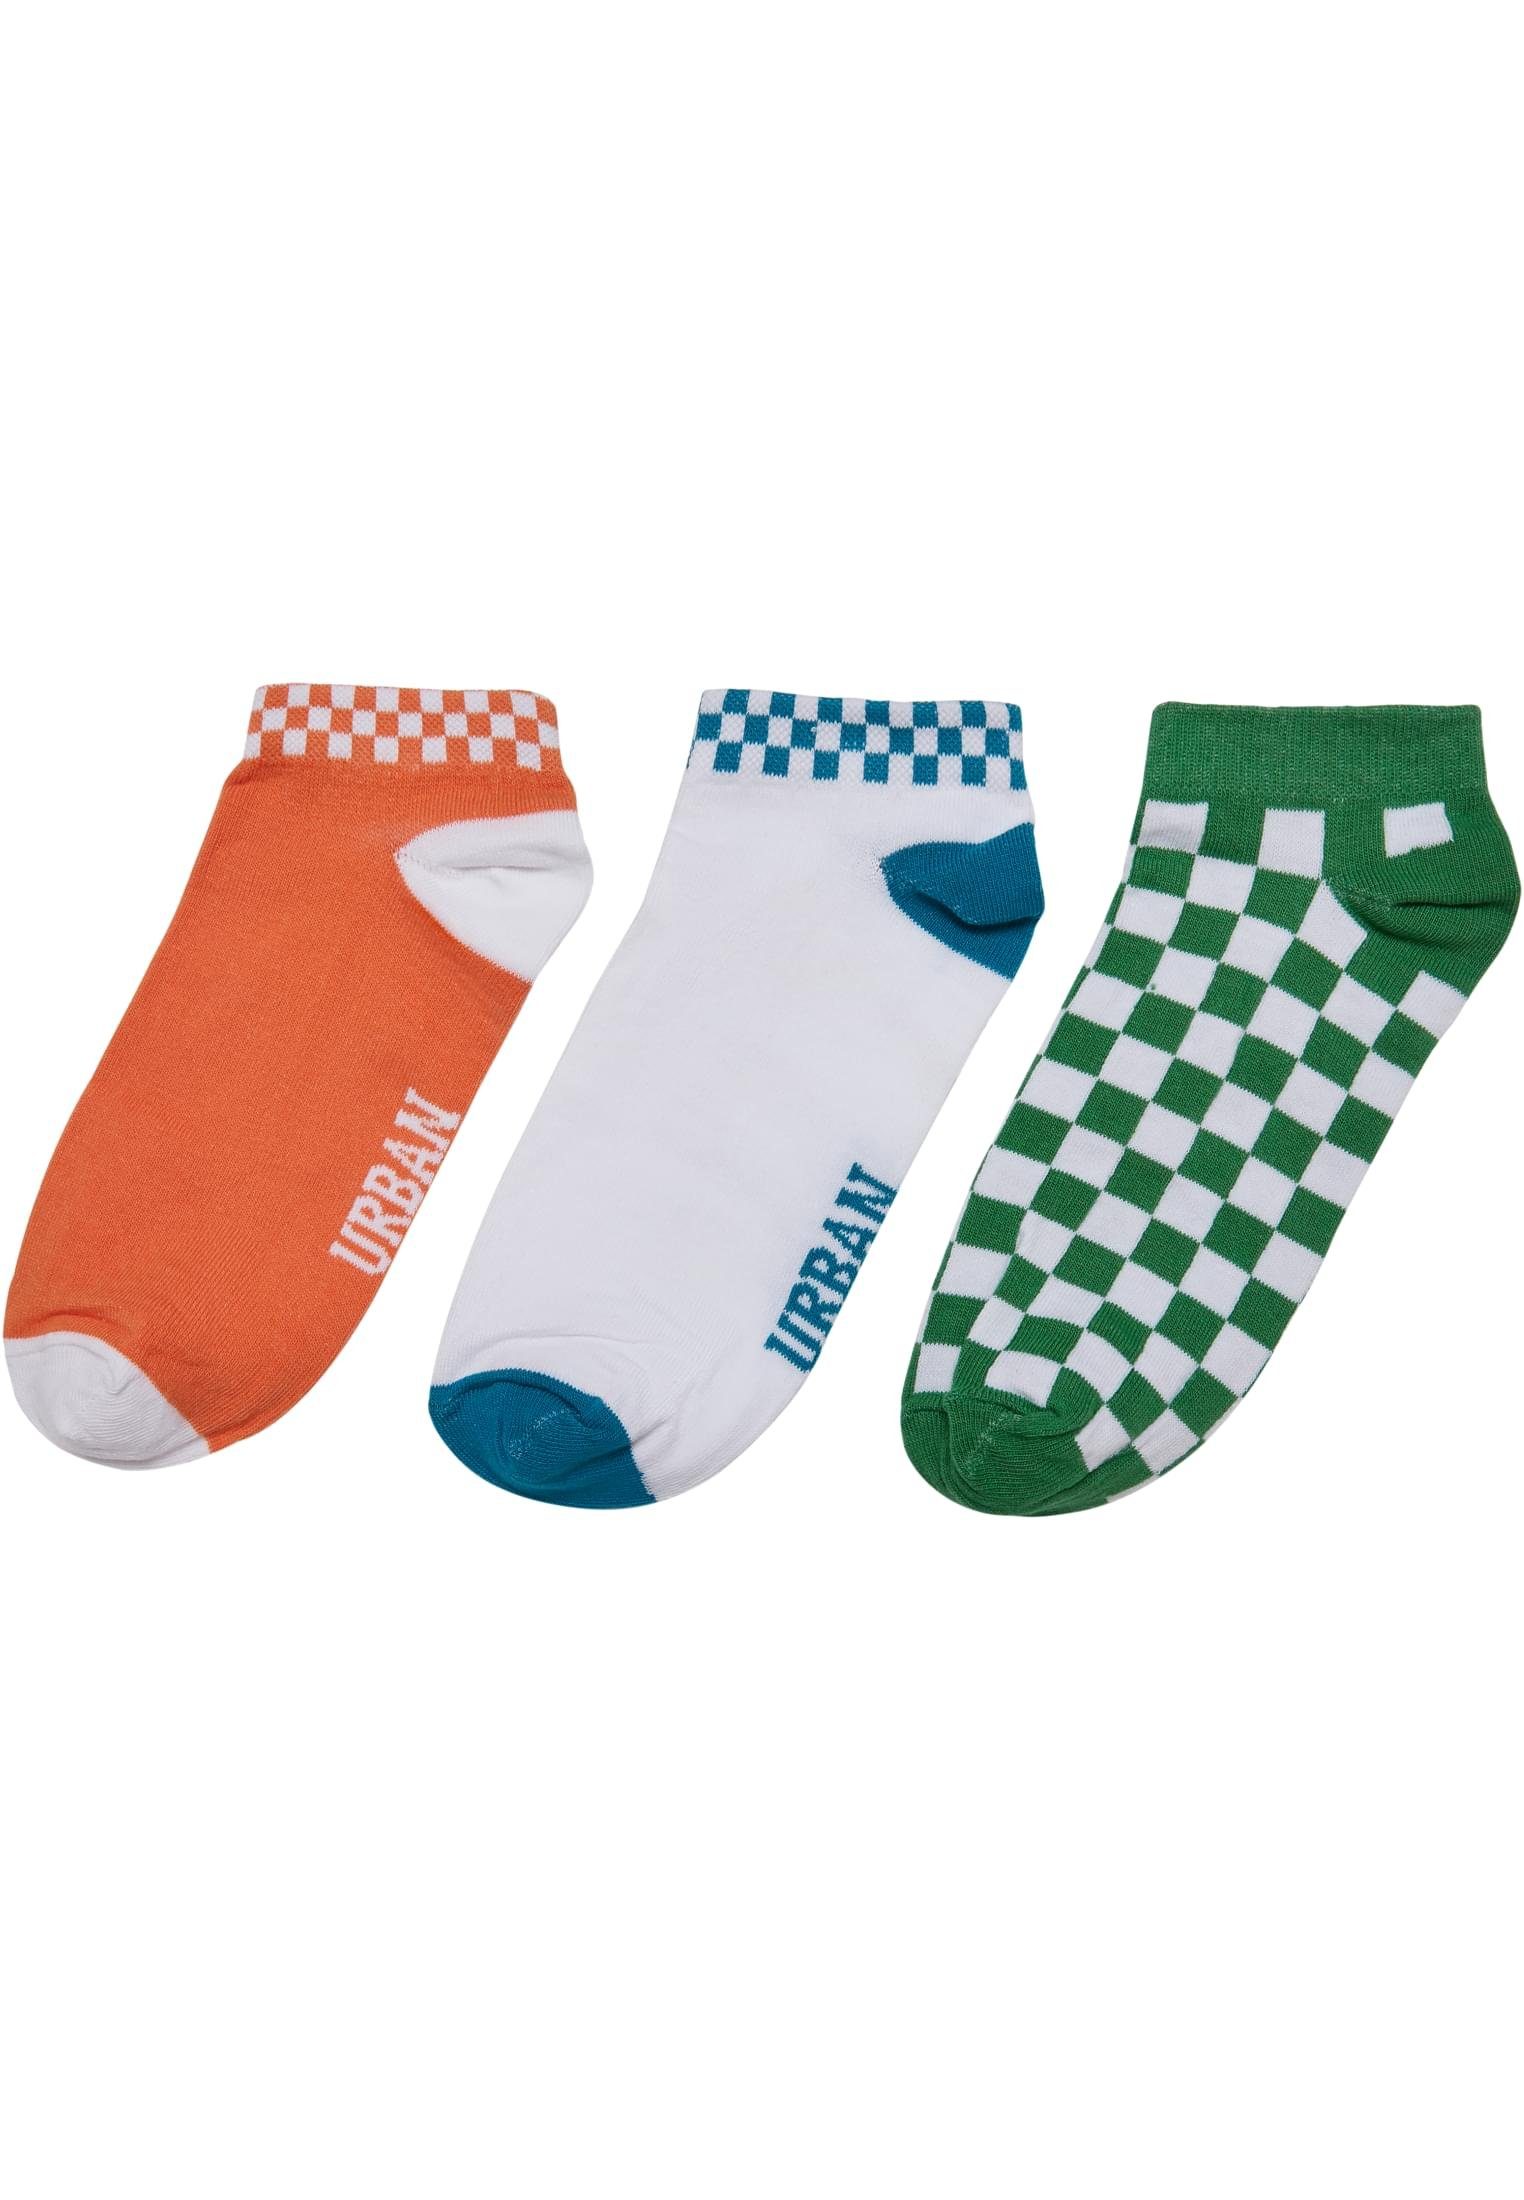 URBAN CLASSICS Freizeitsocken Accessoires Sneaker orange/green/teal Checks 3-Pack (1-Paar) Socks